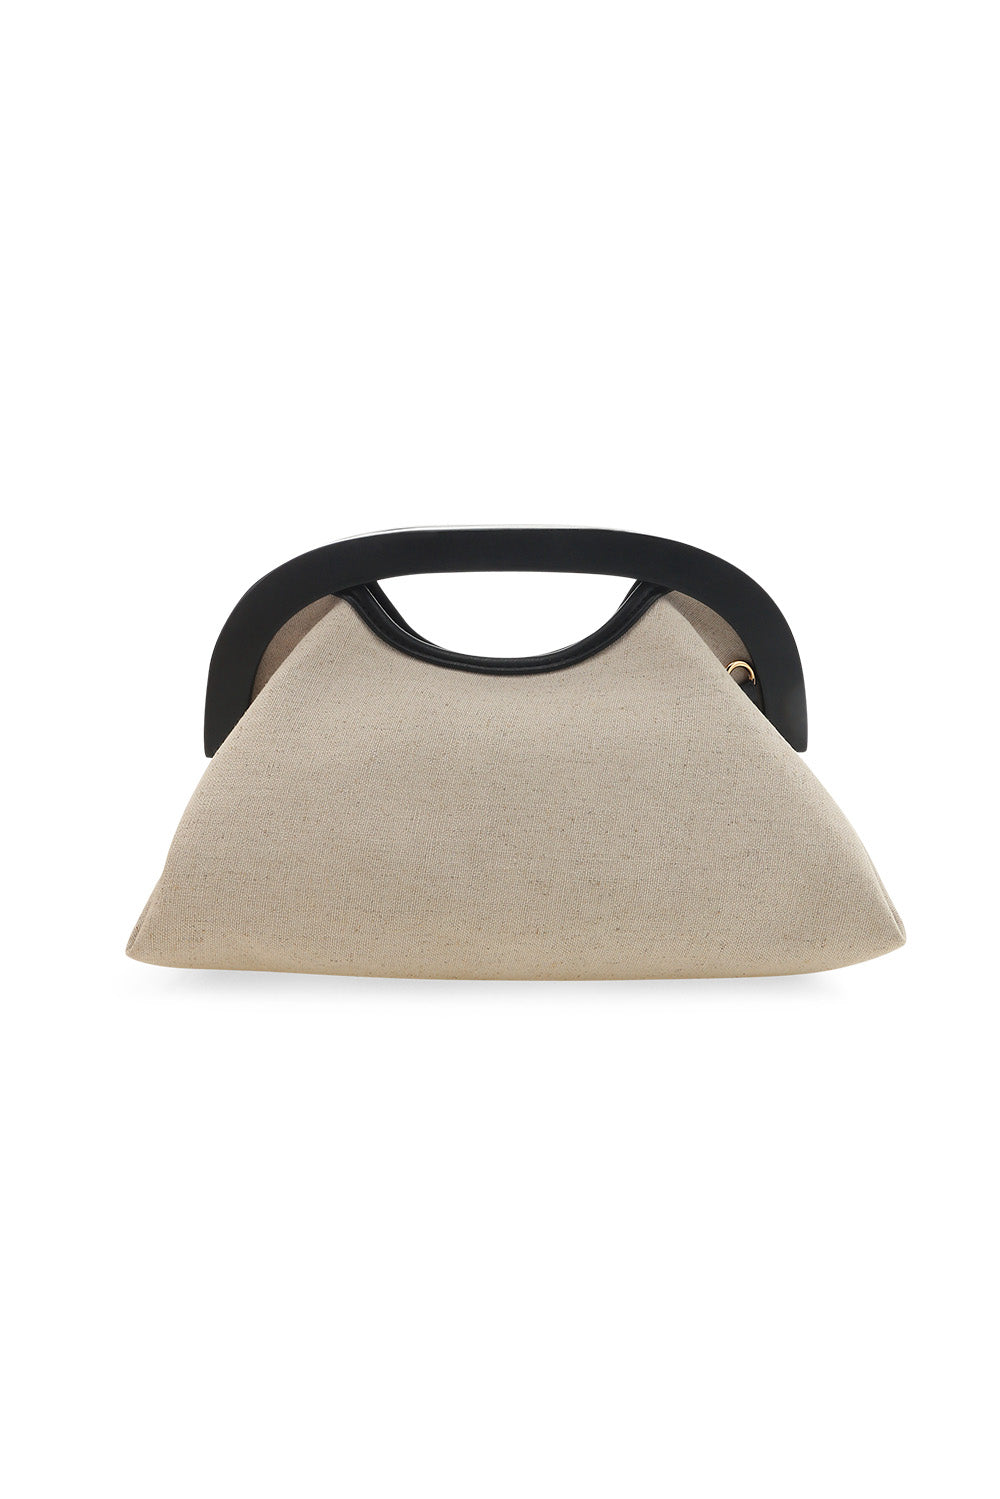 Billini - Dayzi Clutch Bag - Wheat Linen Black - Front